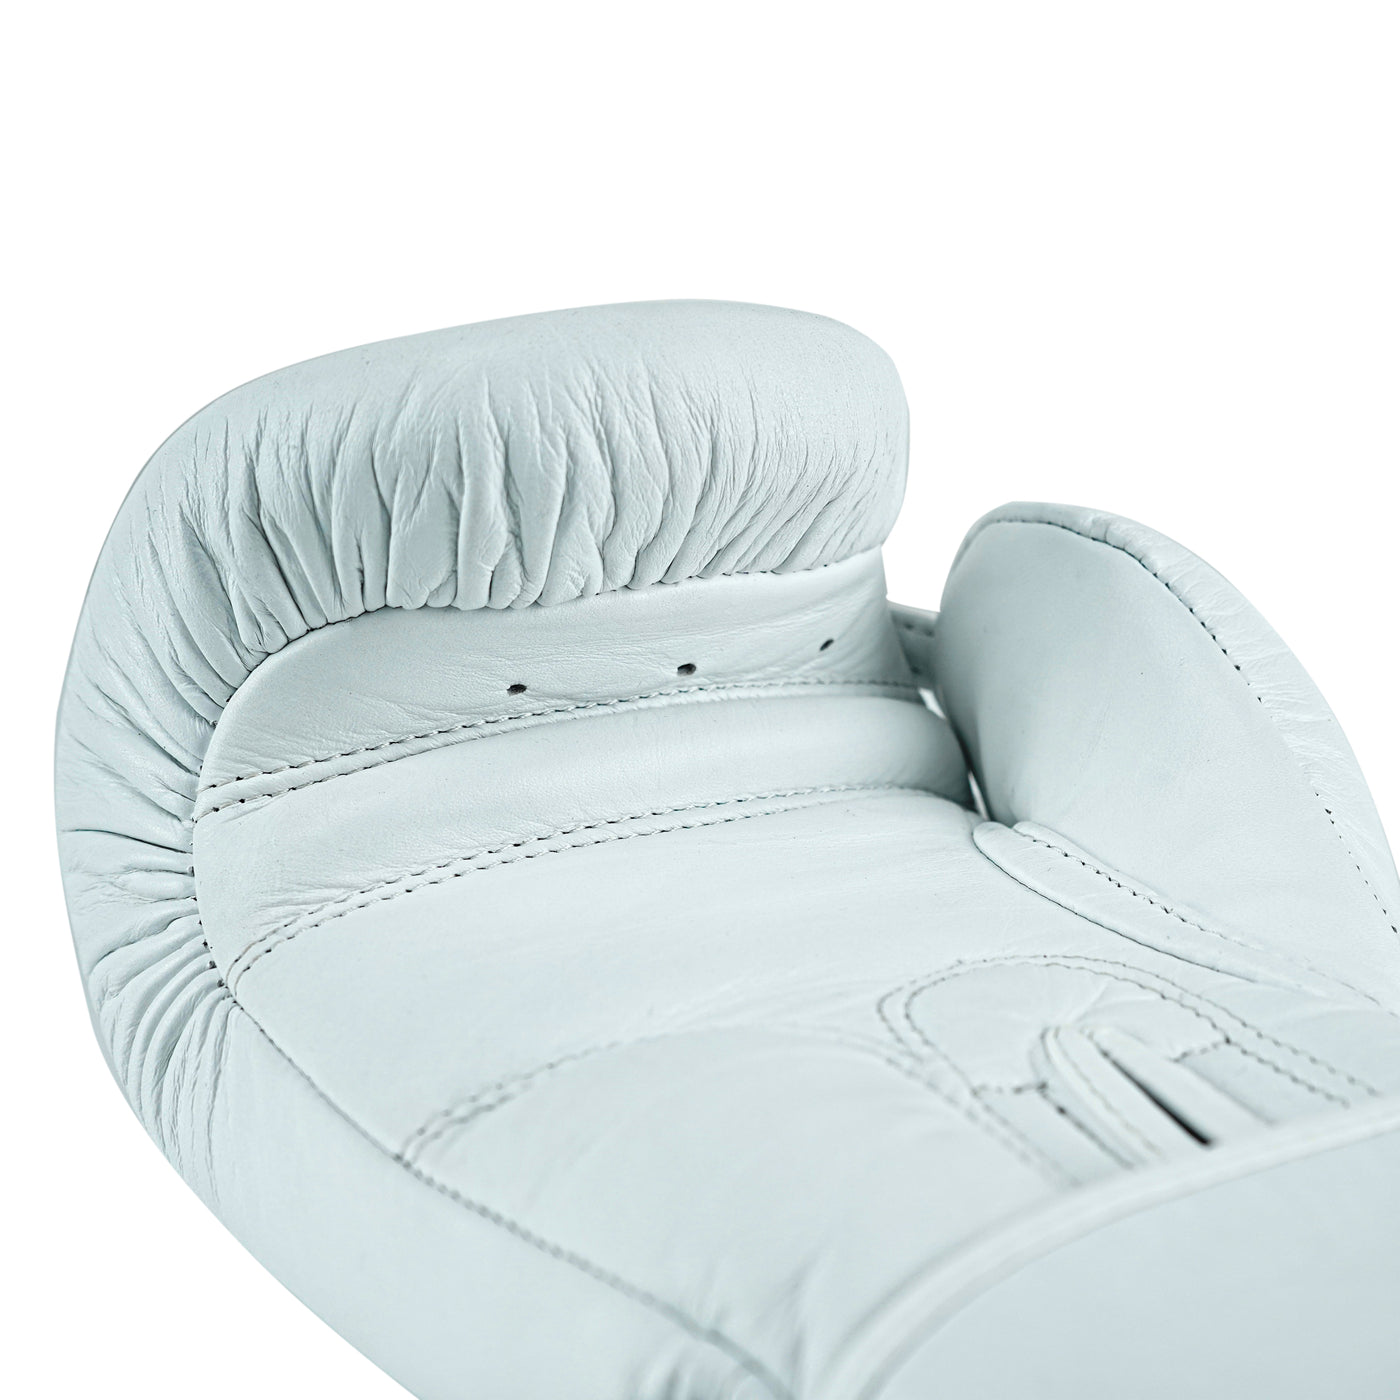 Custom White Genuine Leather Boxing Training Gloves C38